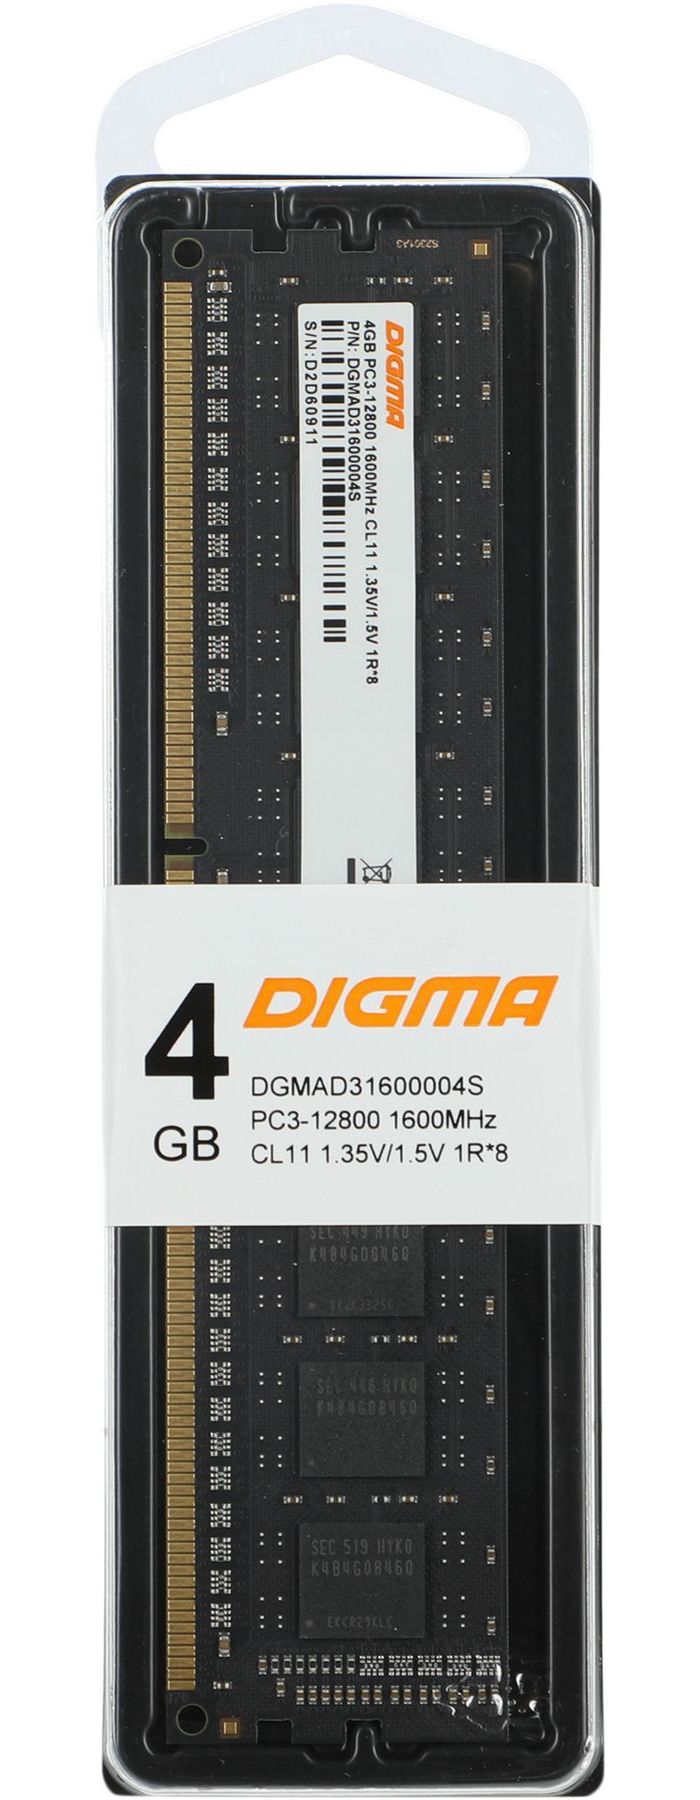 Оперативная память DDR3L Digma 4Gb 1600MHz DIMM (DGMAD31600004S) память оперативная ddr3l kingspec 4gb 1600mhz ks1600d3p13504g